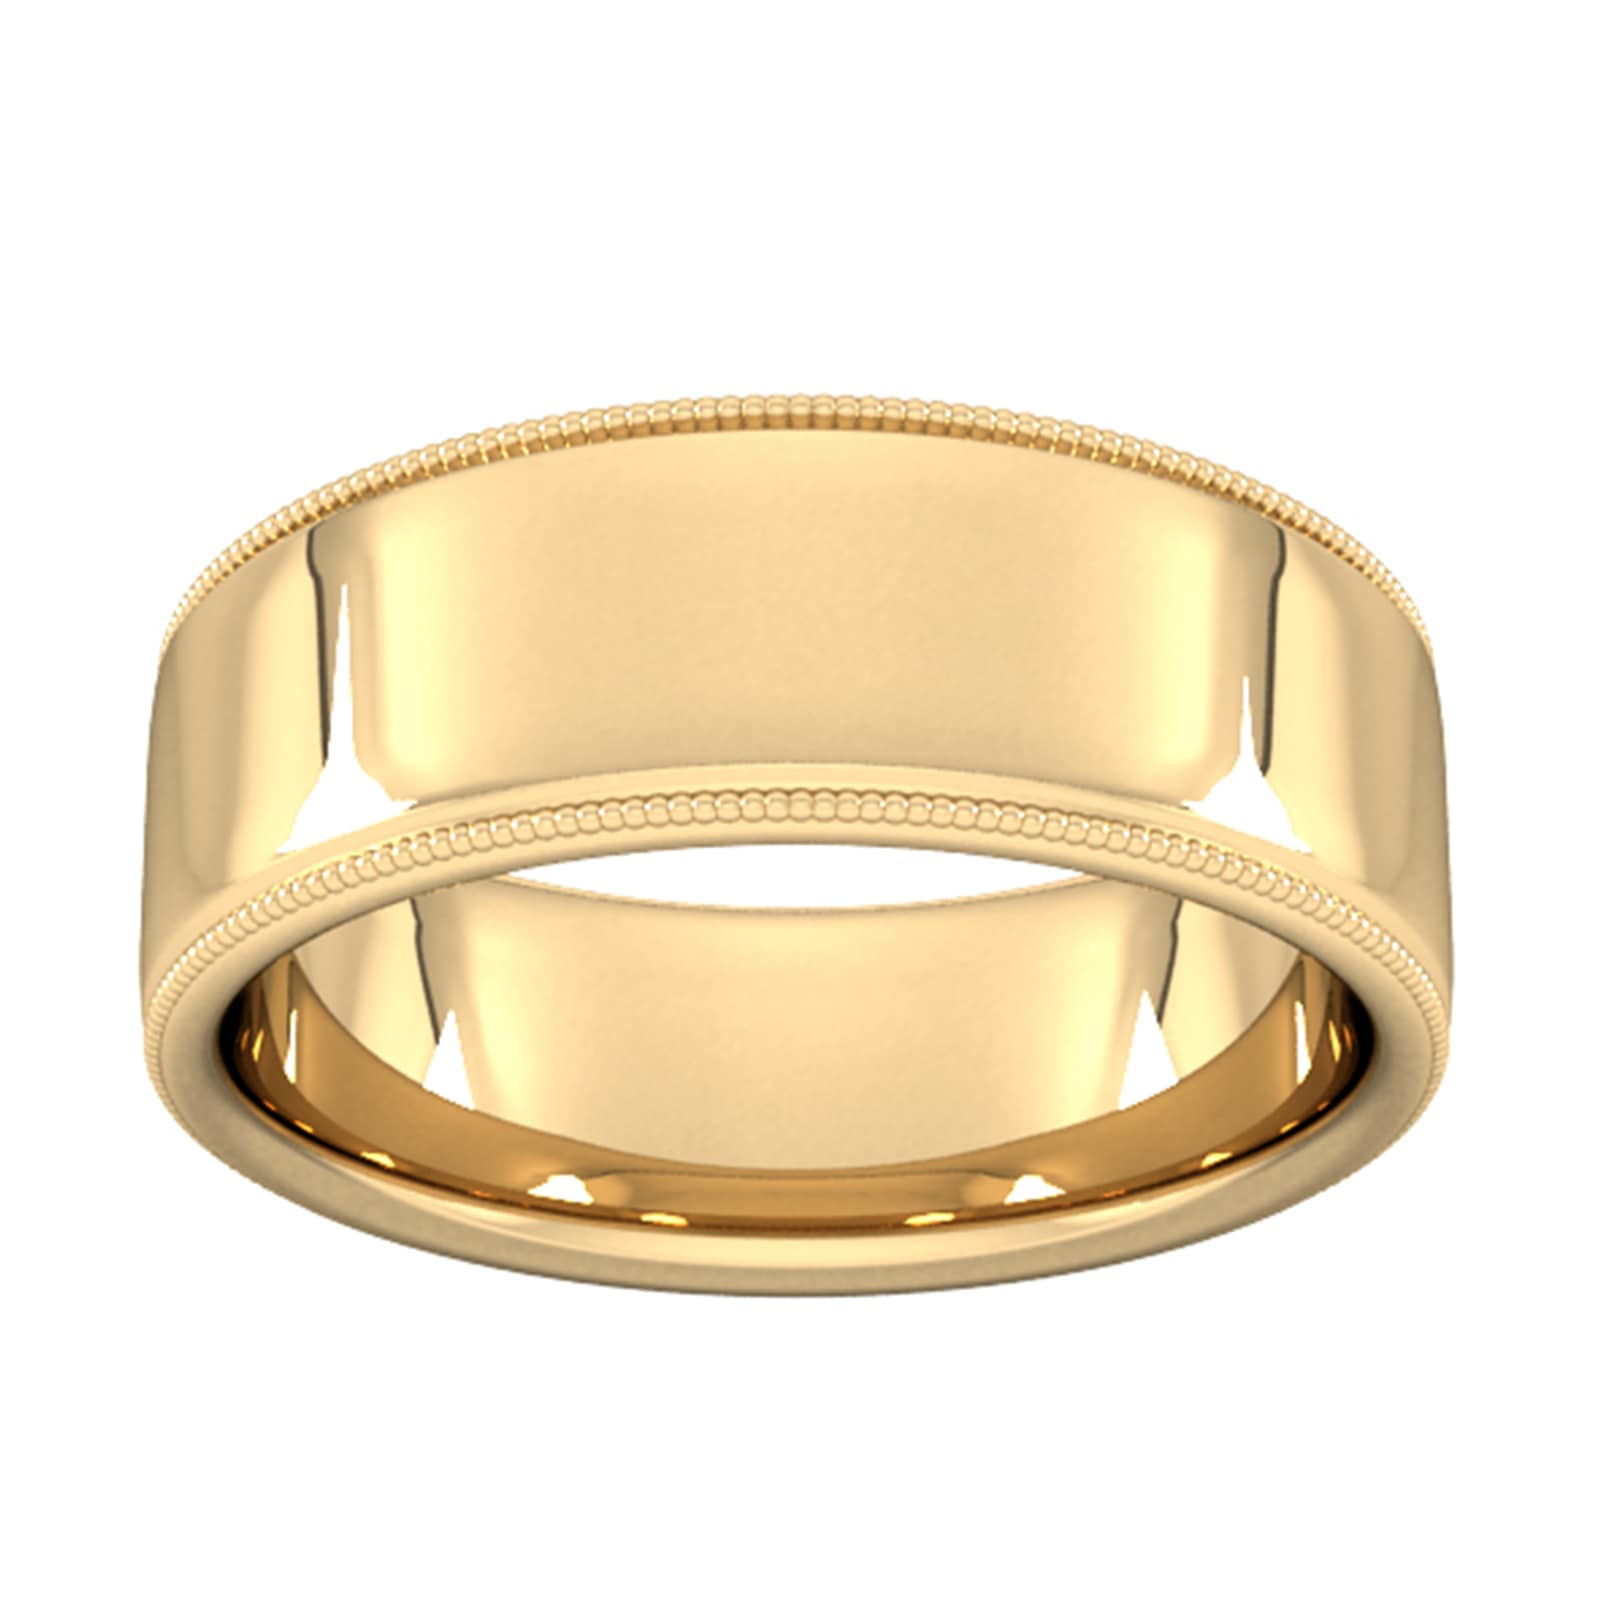 8mm Slight Court Standard Milgrain Edge Wedding Ring In 9 Carat Yellow Gold - Ring Size L